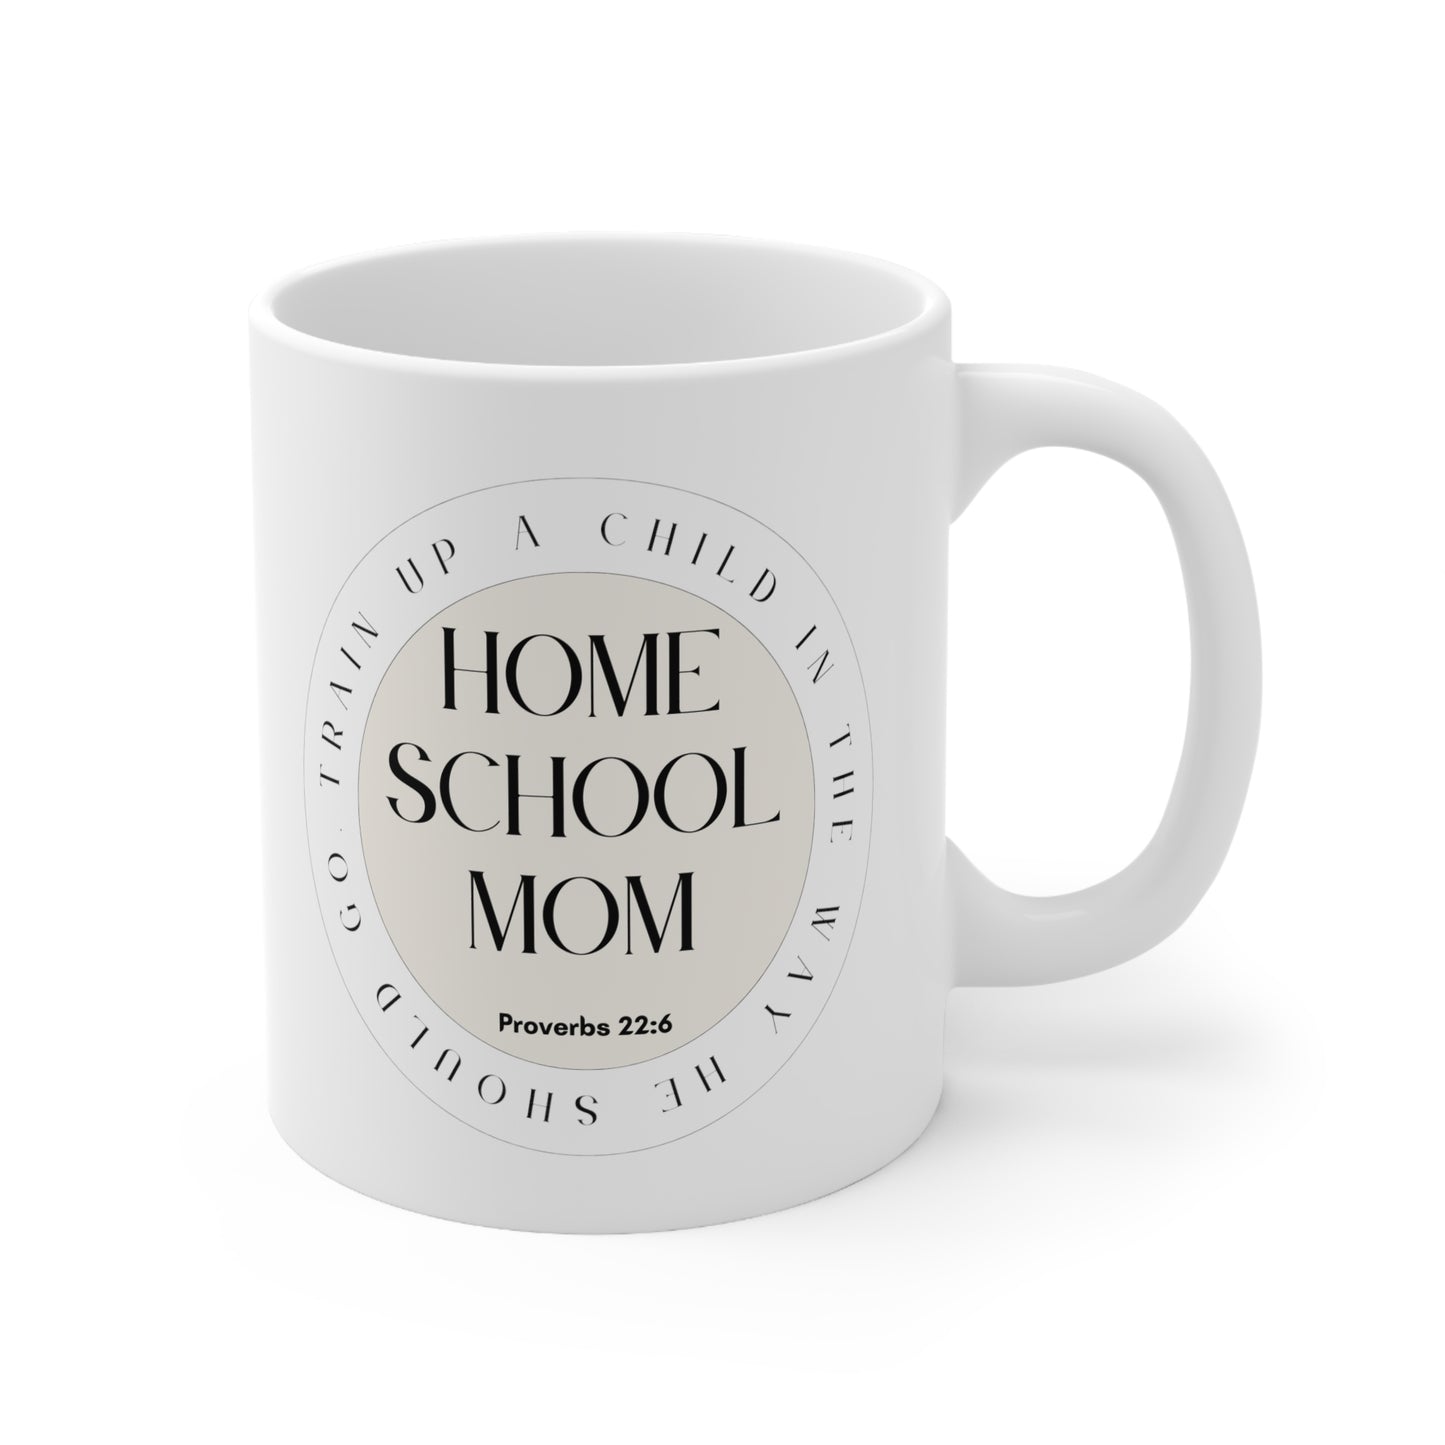 Home School Mom Gift Mug, Train Up A Child, Proverbs 22:6